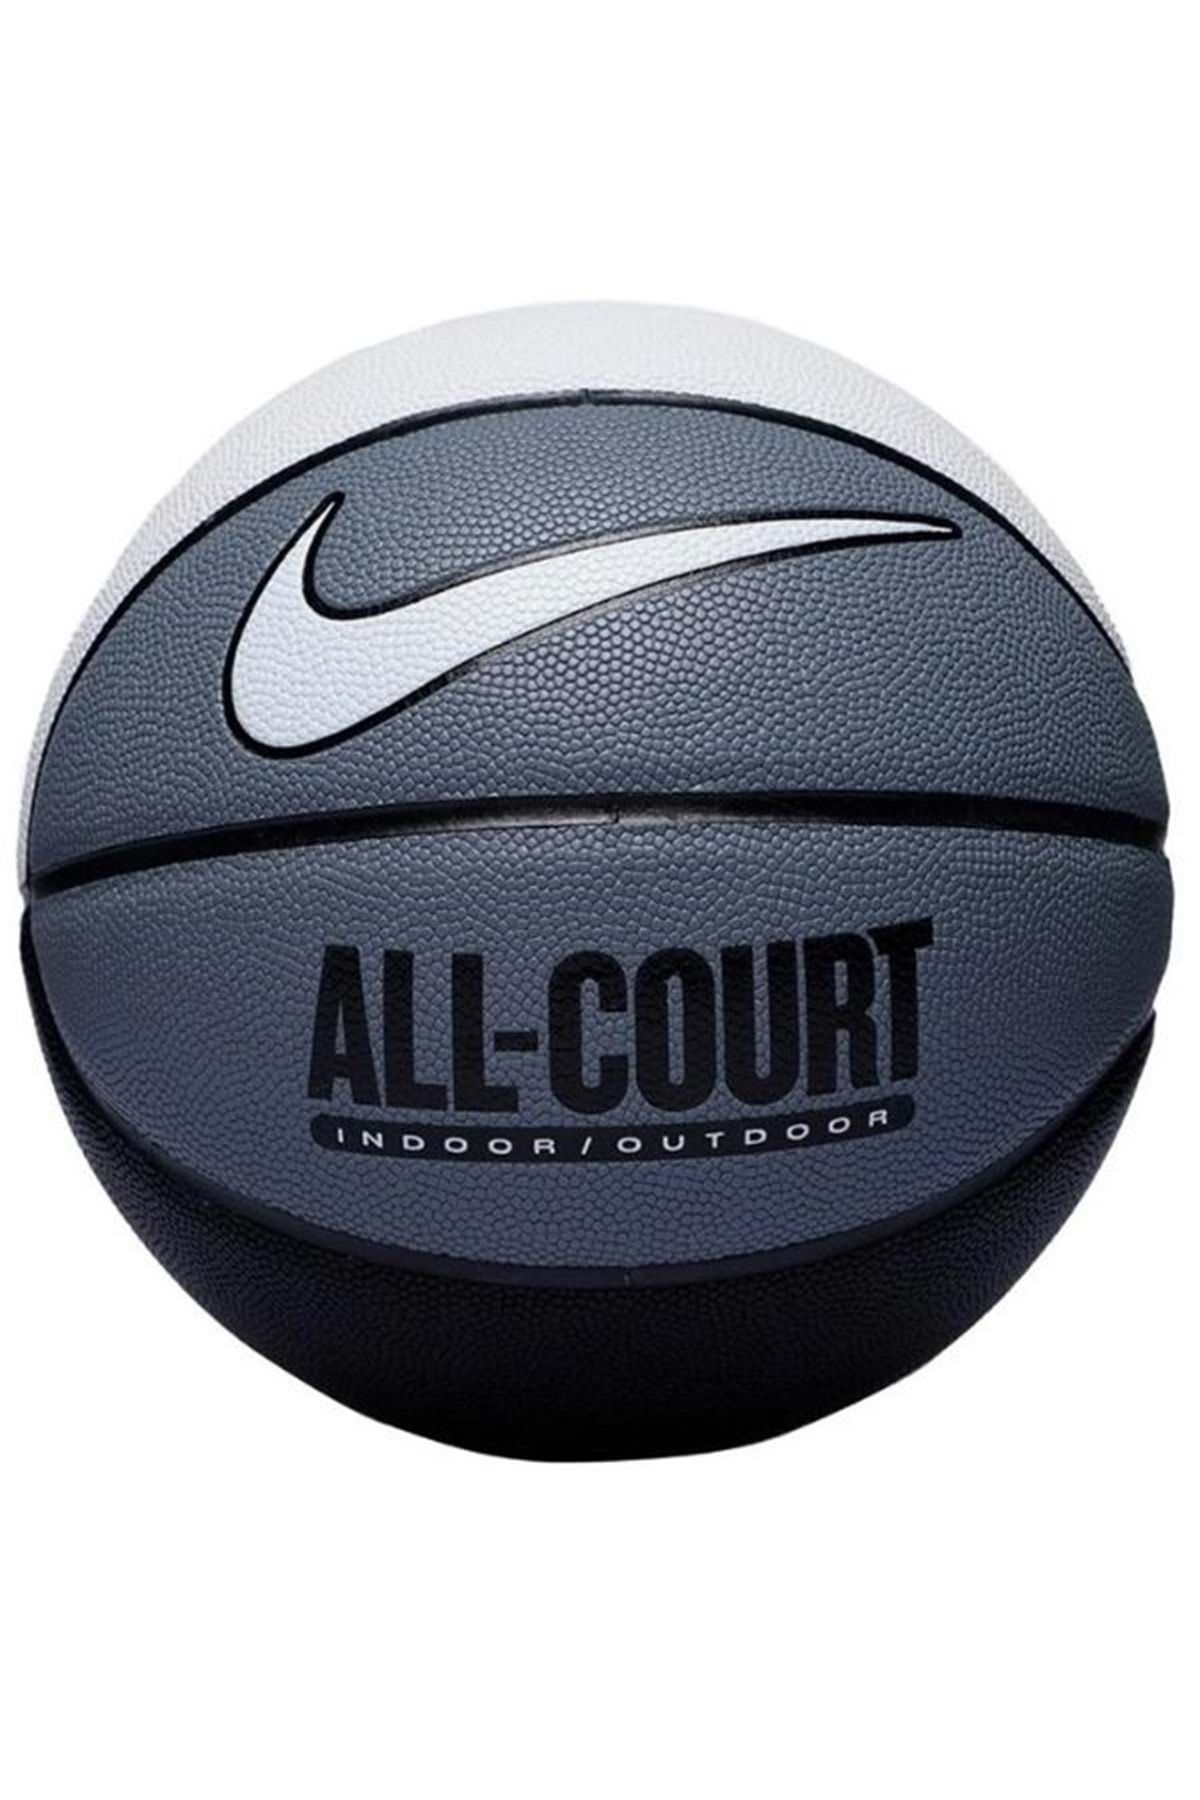 Nike Everyday All-court Unisex Basketbol Topu Siyah